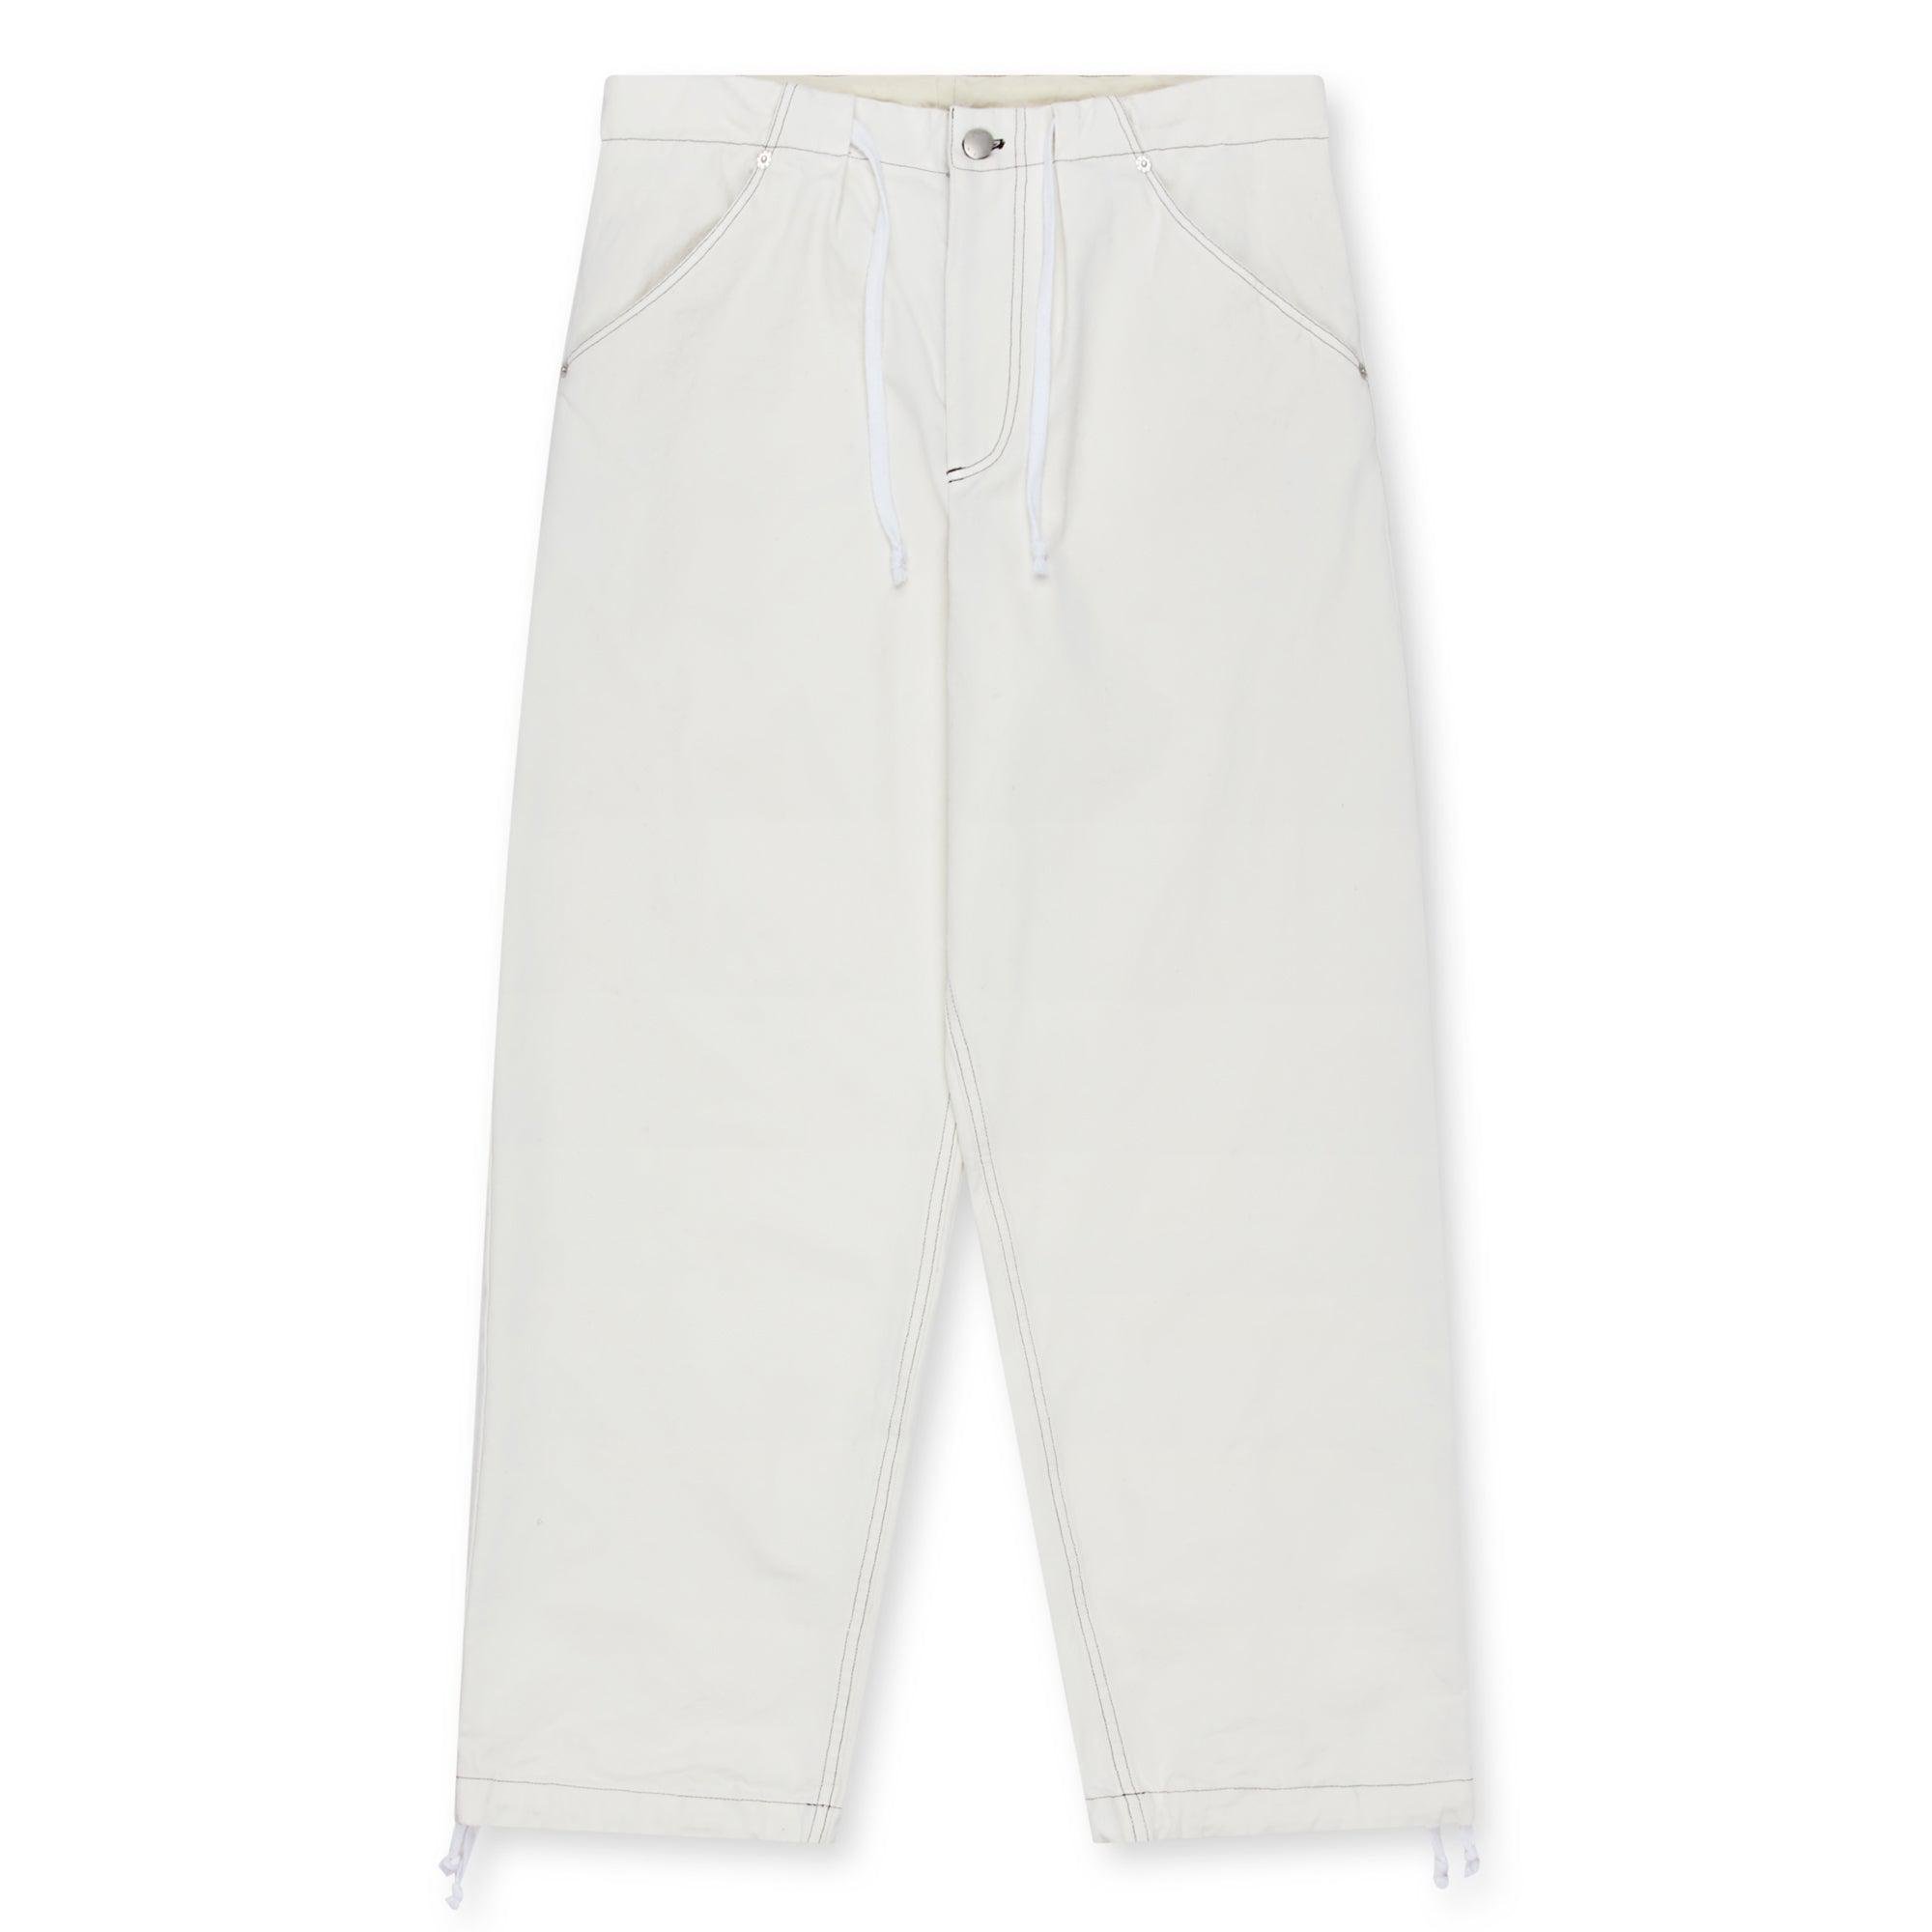 3Man - Men’s Workwear Trousers - (White) by 3MAN